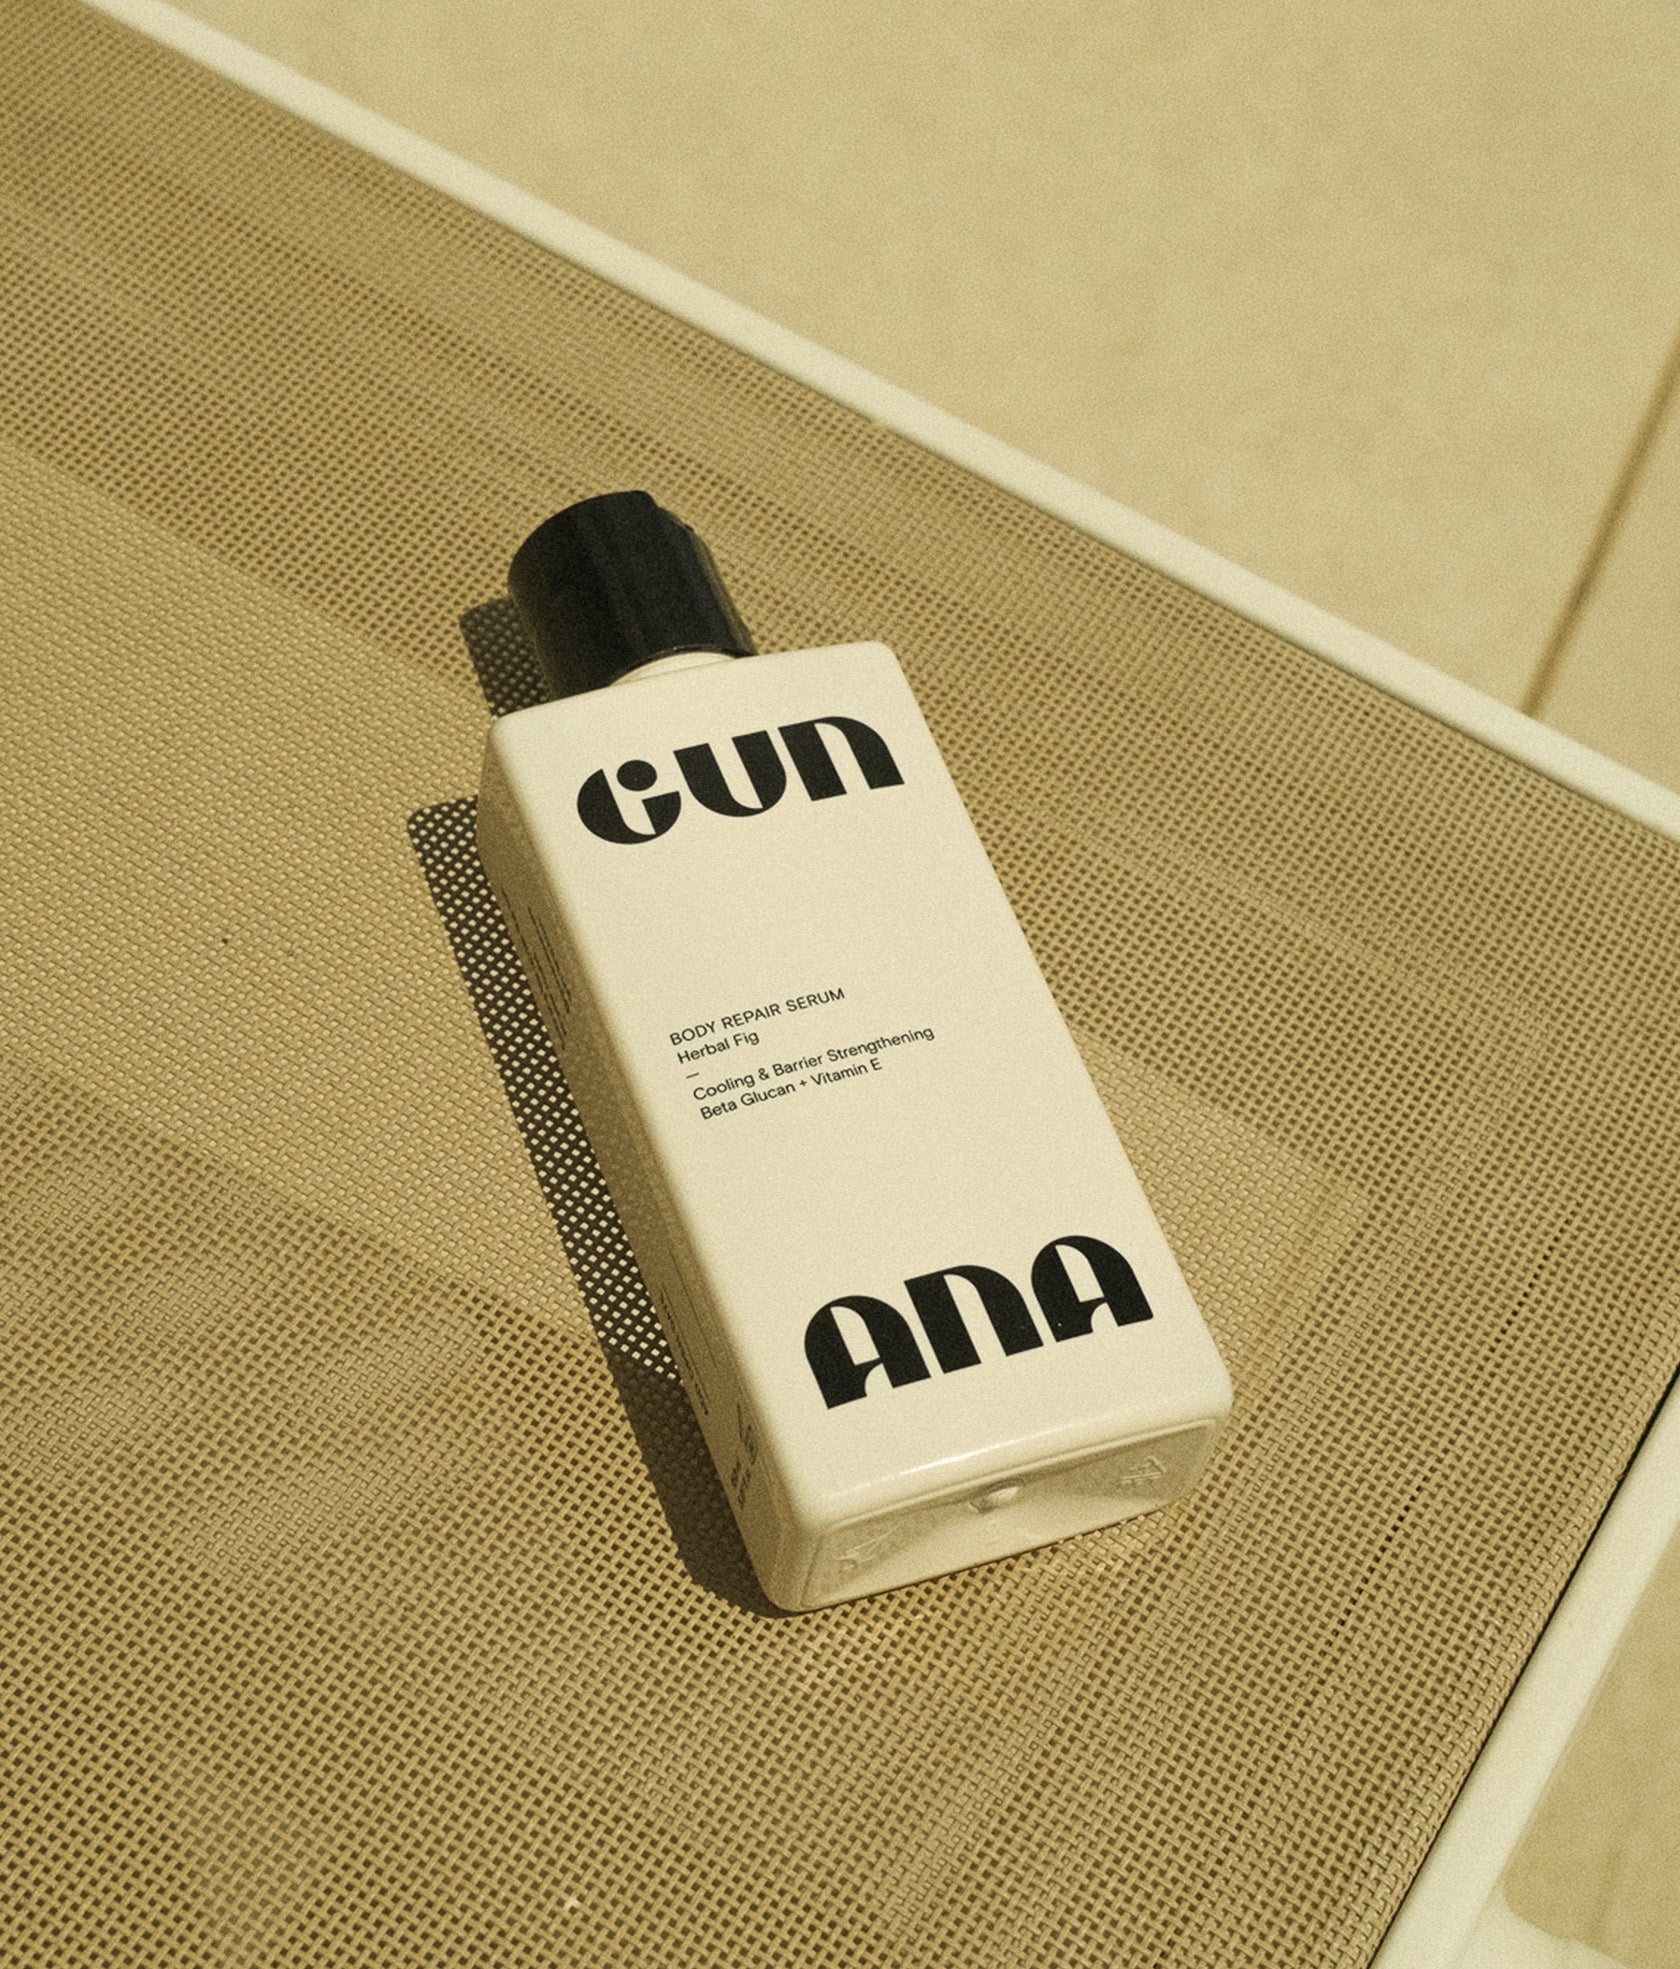 Body Repair Serum - Gun Ana